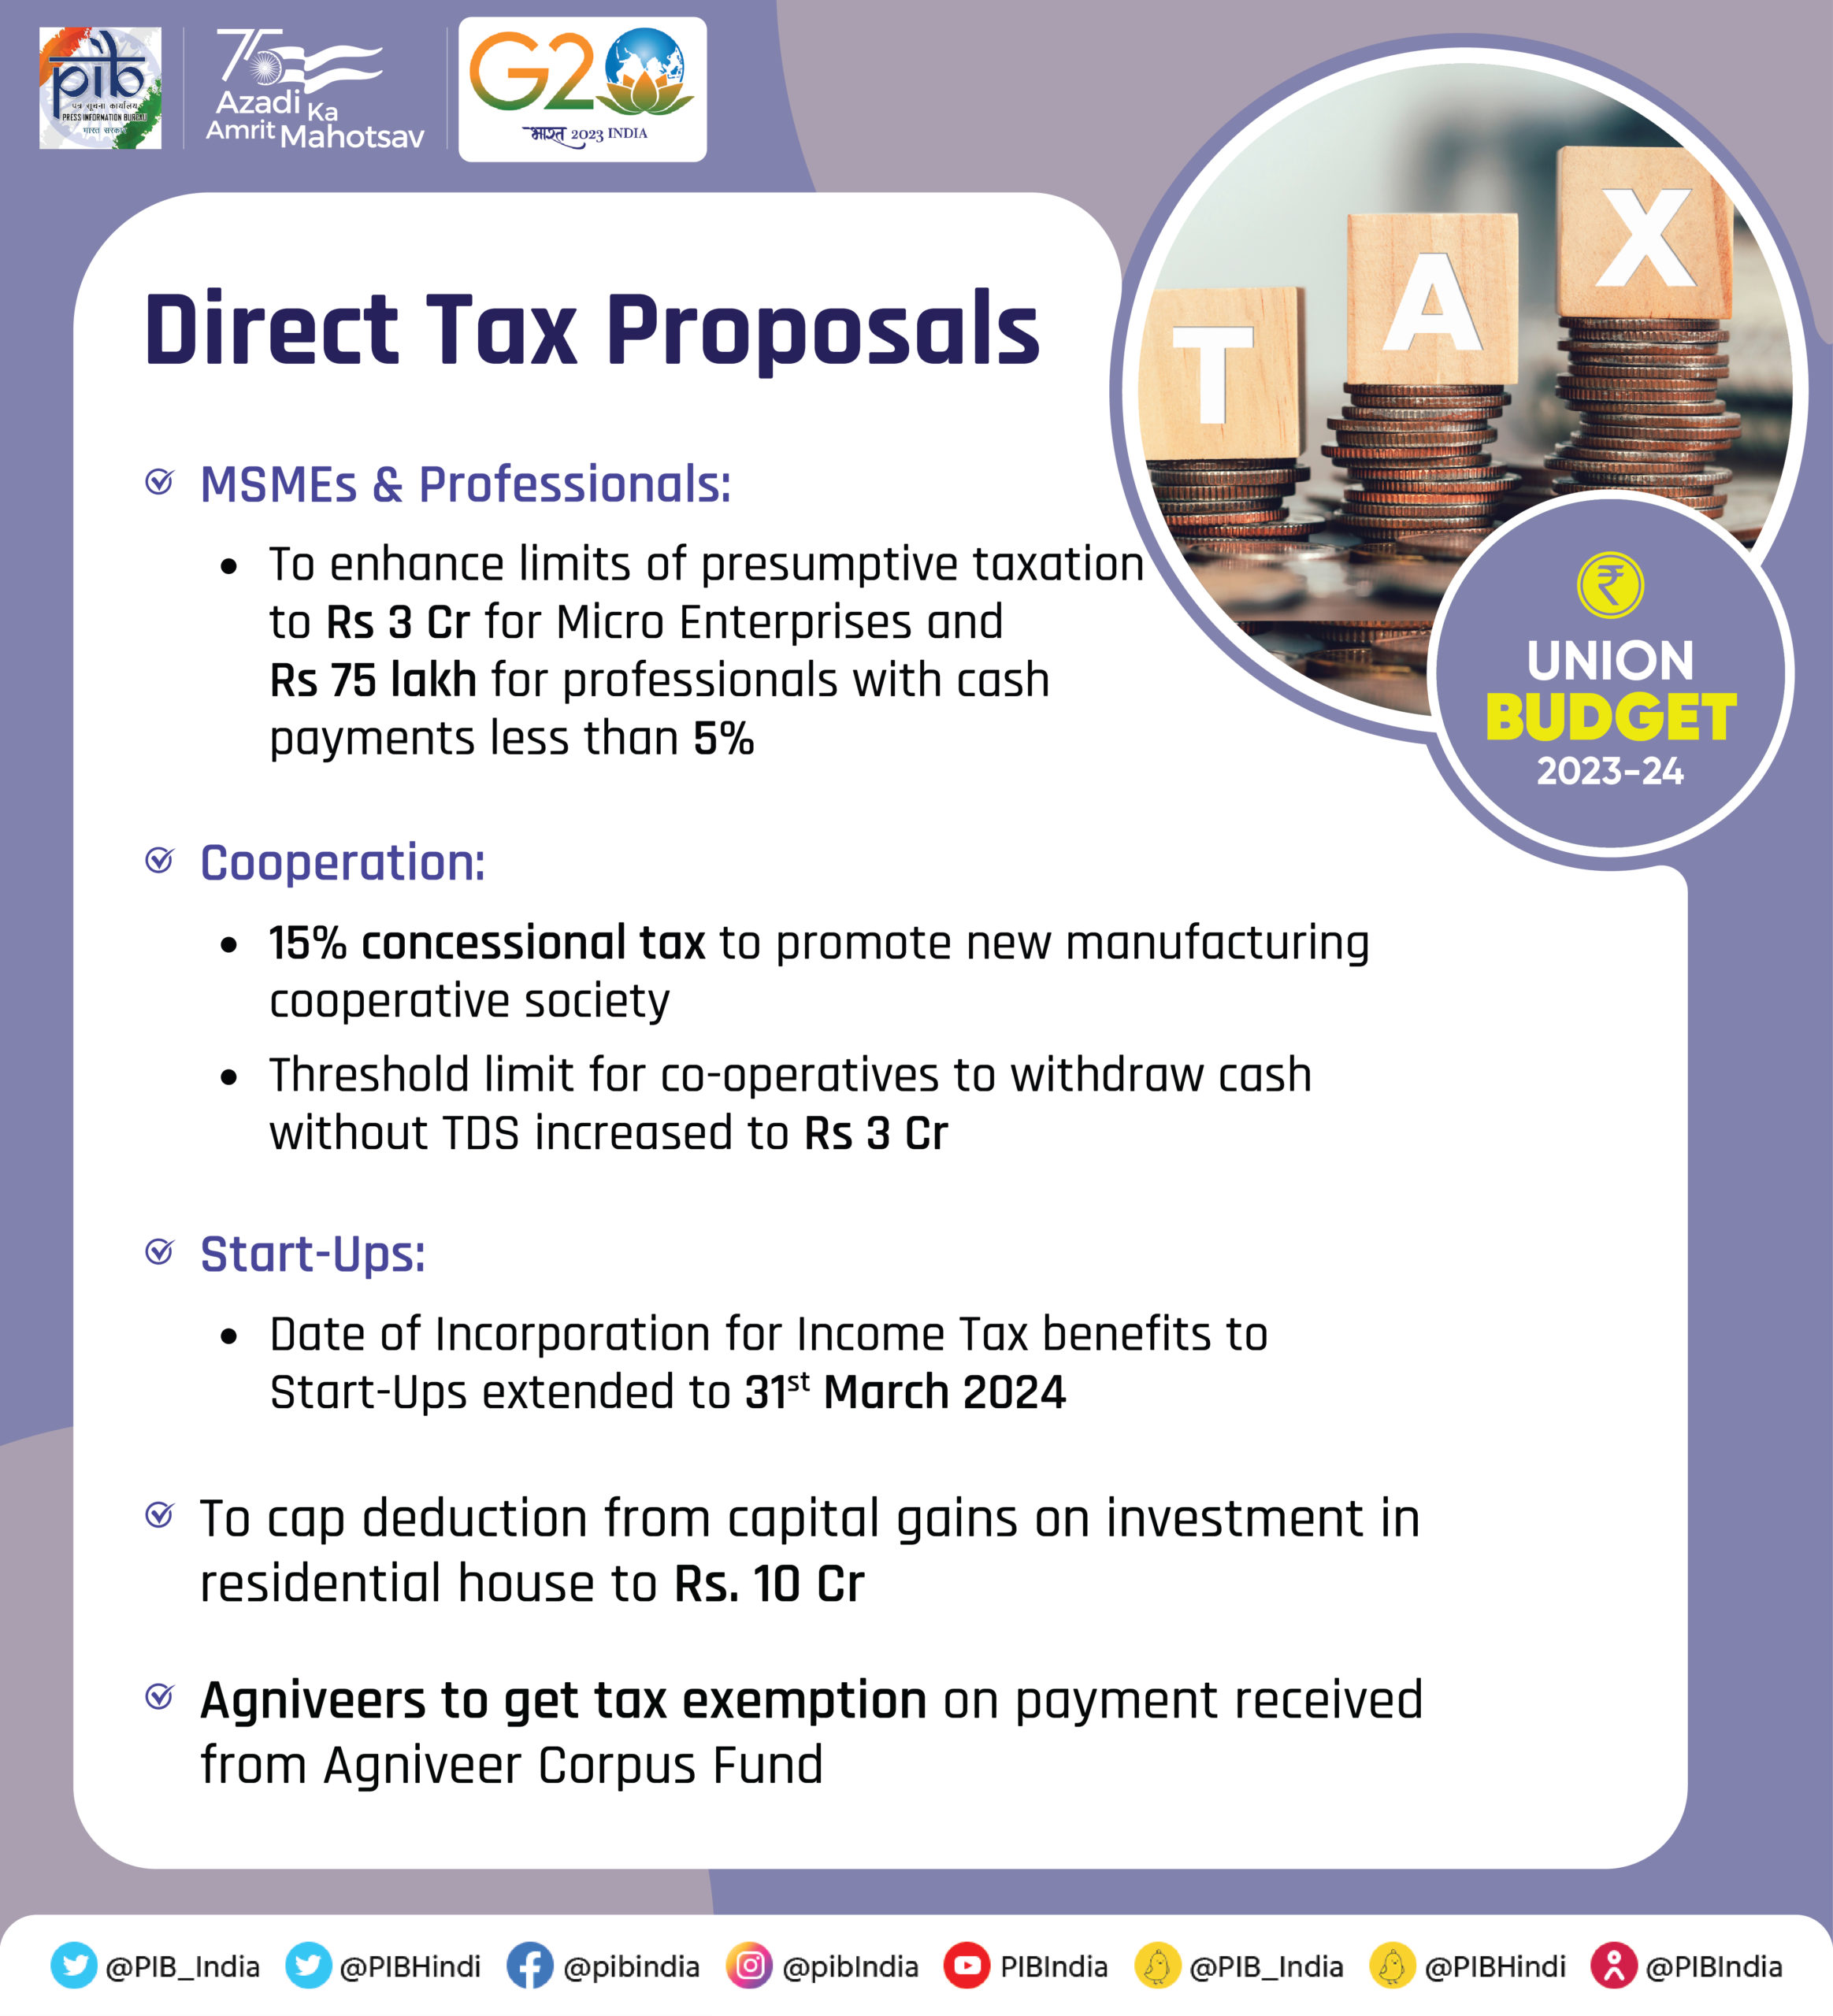 Direct Tax Proposals Union Budget 2023-24